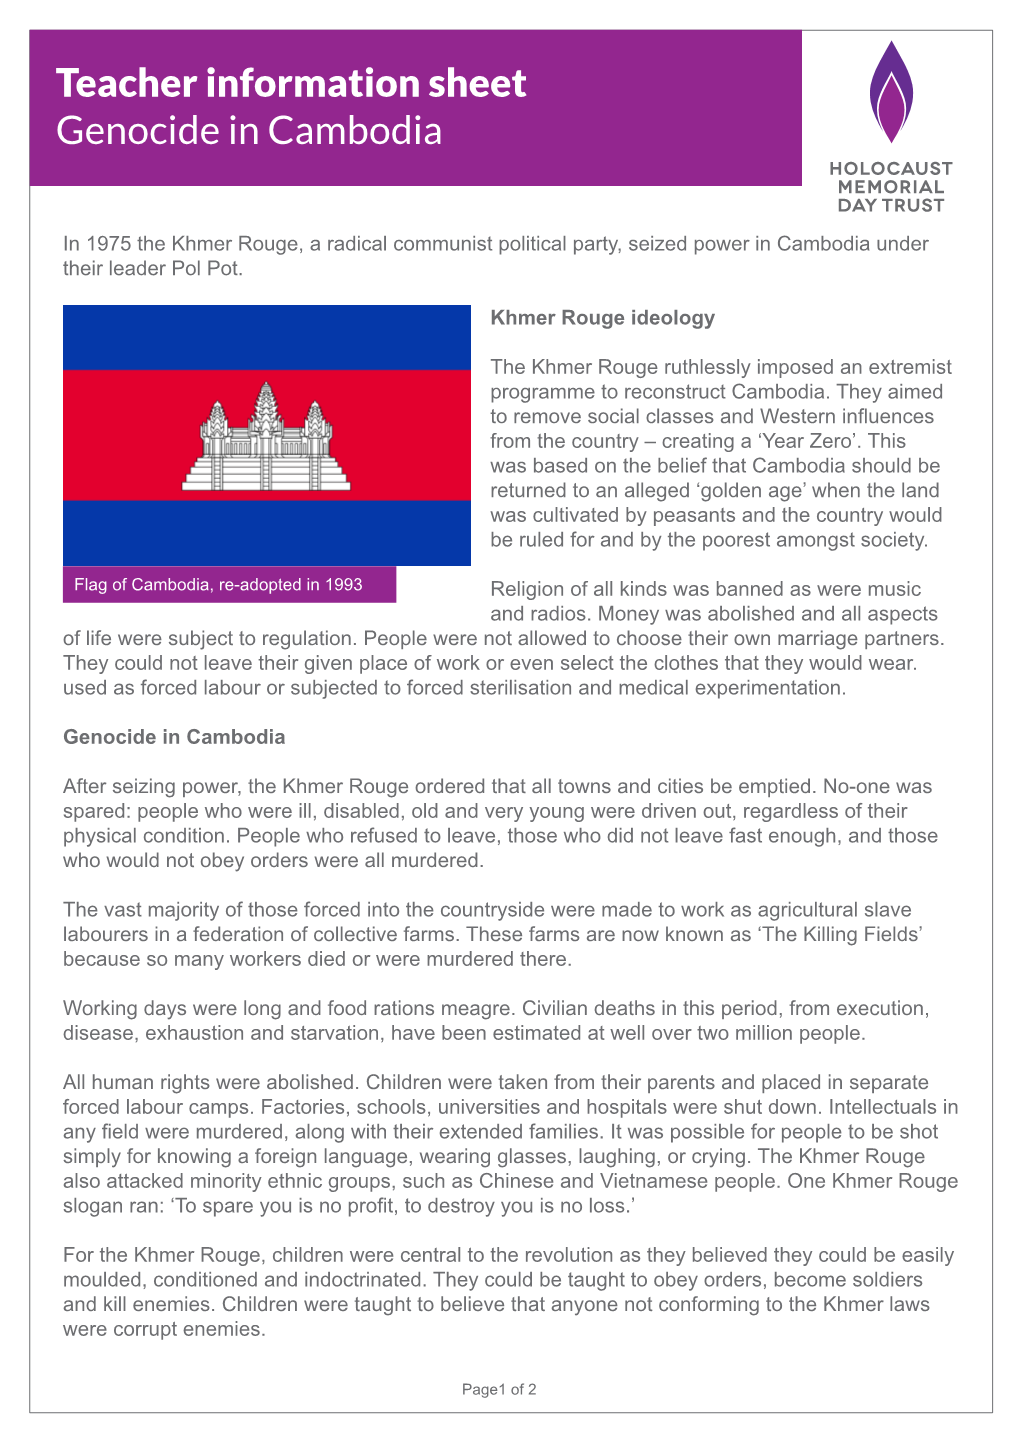 Teacher Information Sheet Genocide in Cambodia